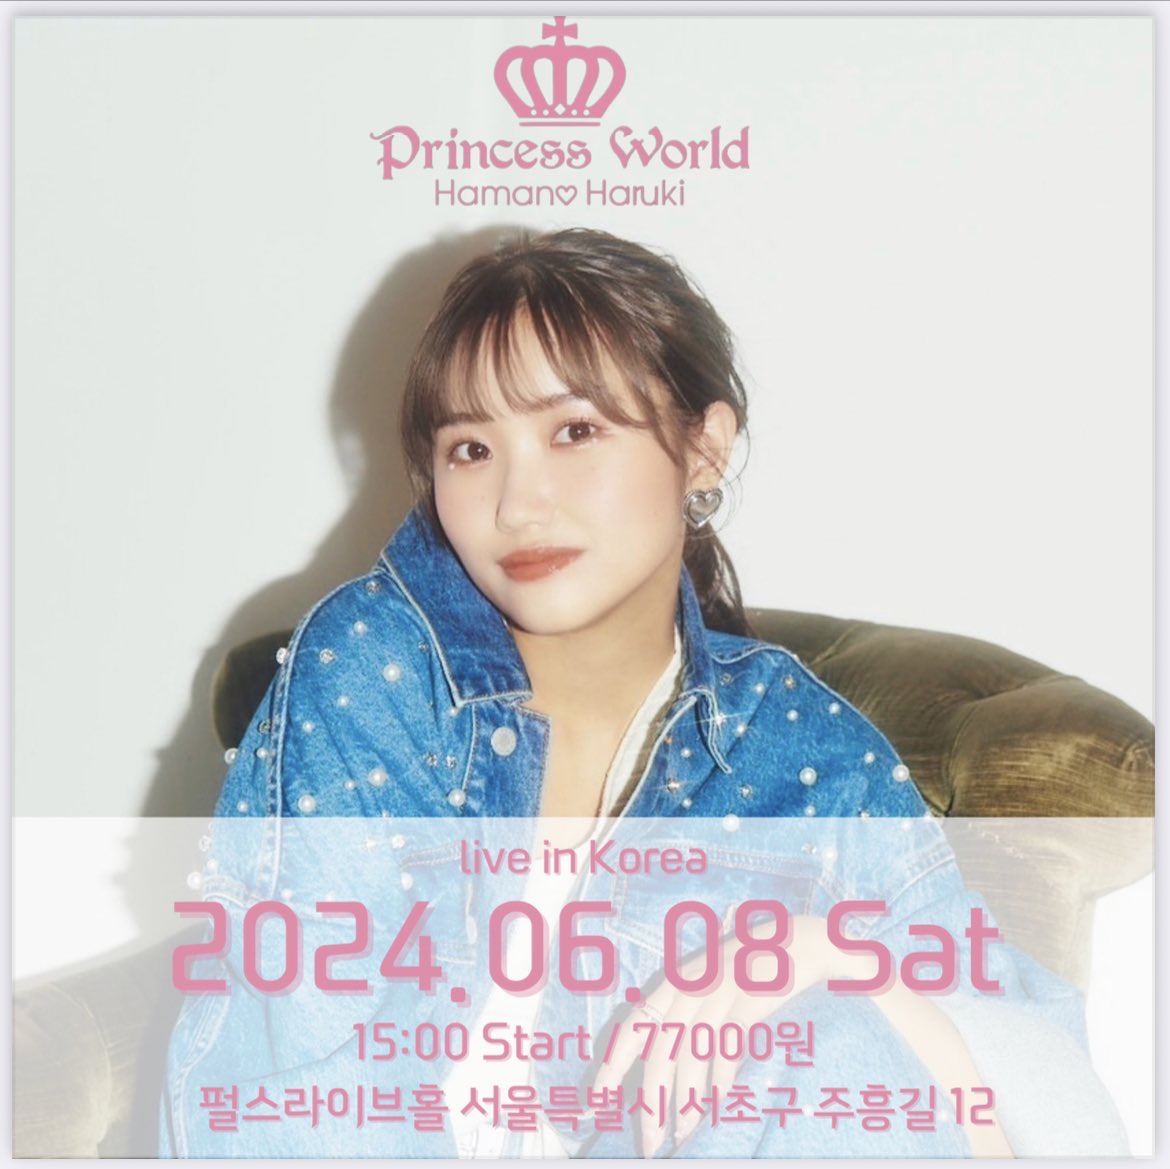 【LIVE】Princess World in Korea Tikcet now on sale